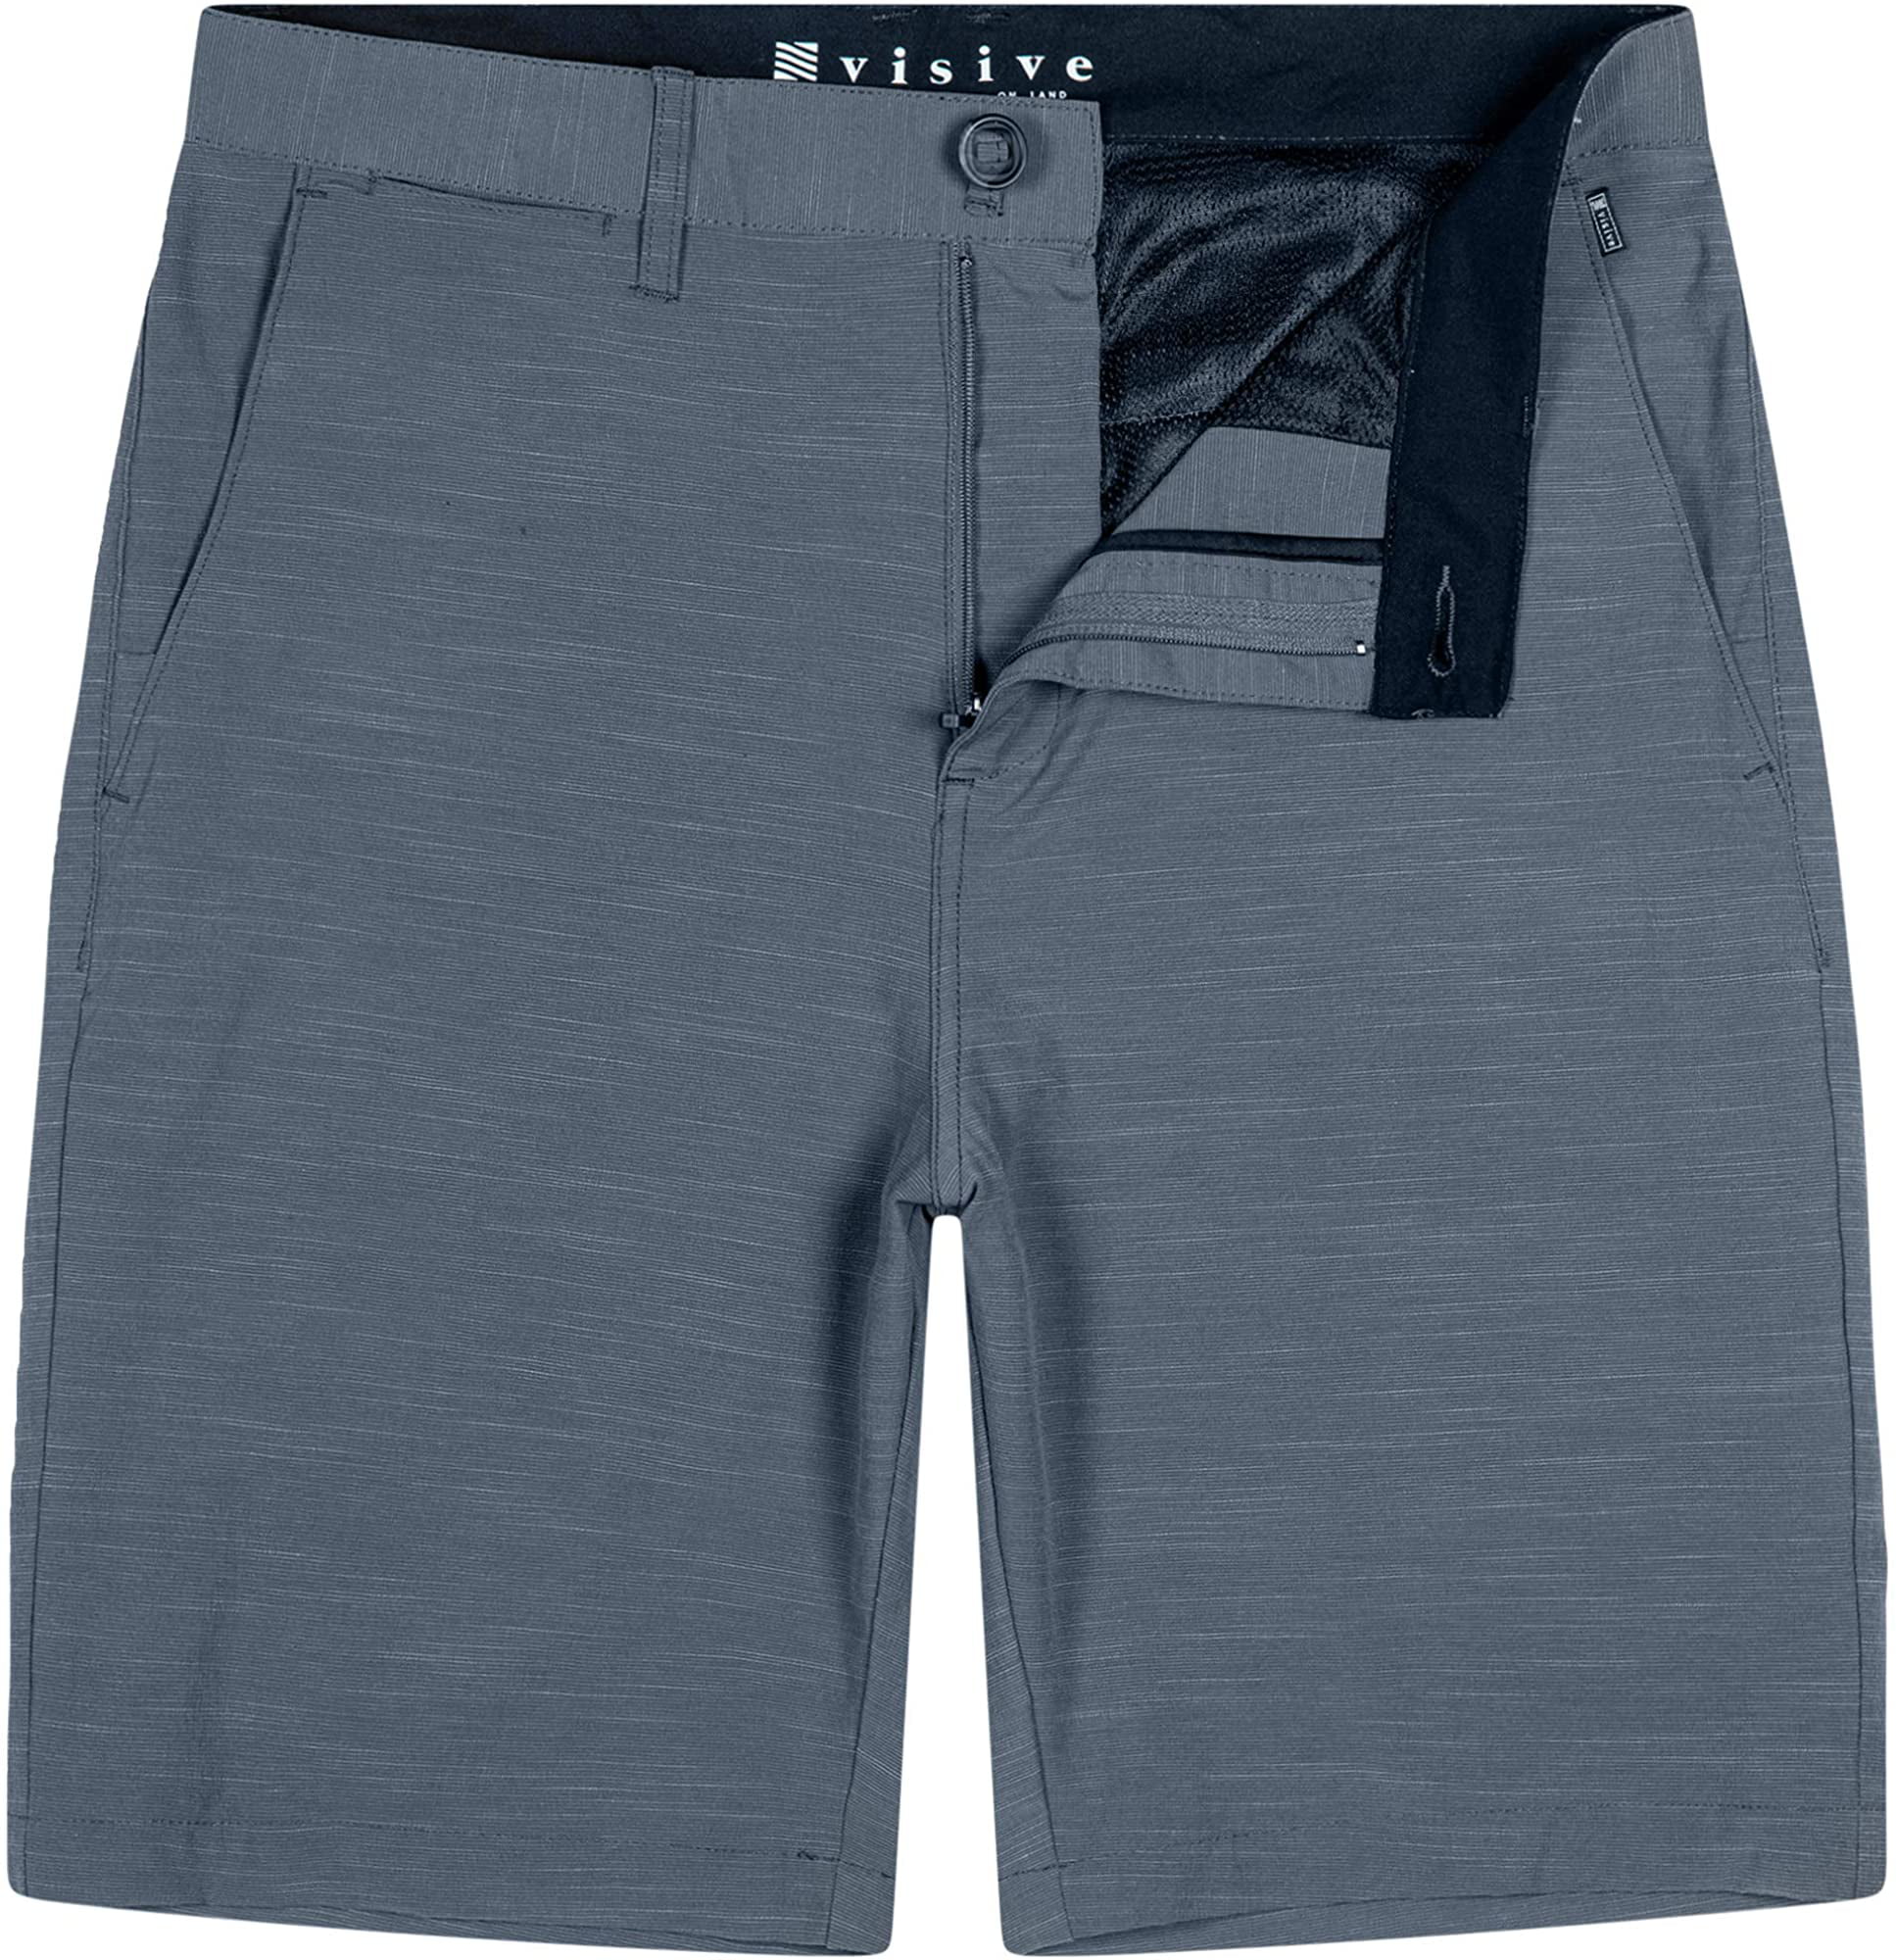 Visive Mens Hybrid Quick Dry Board Shorts/Walk Short Size 30-44 